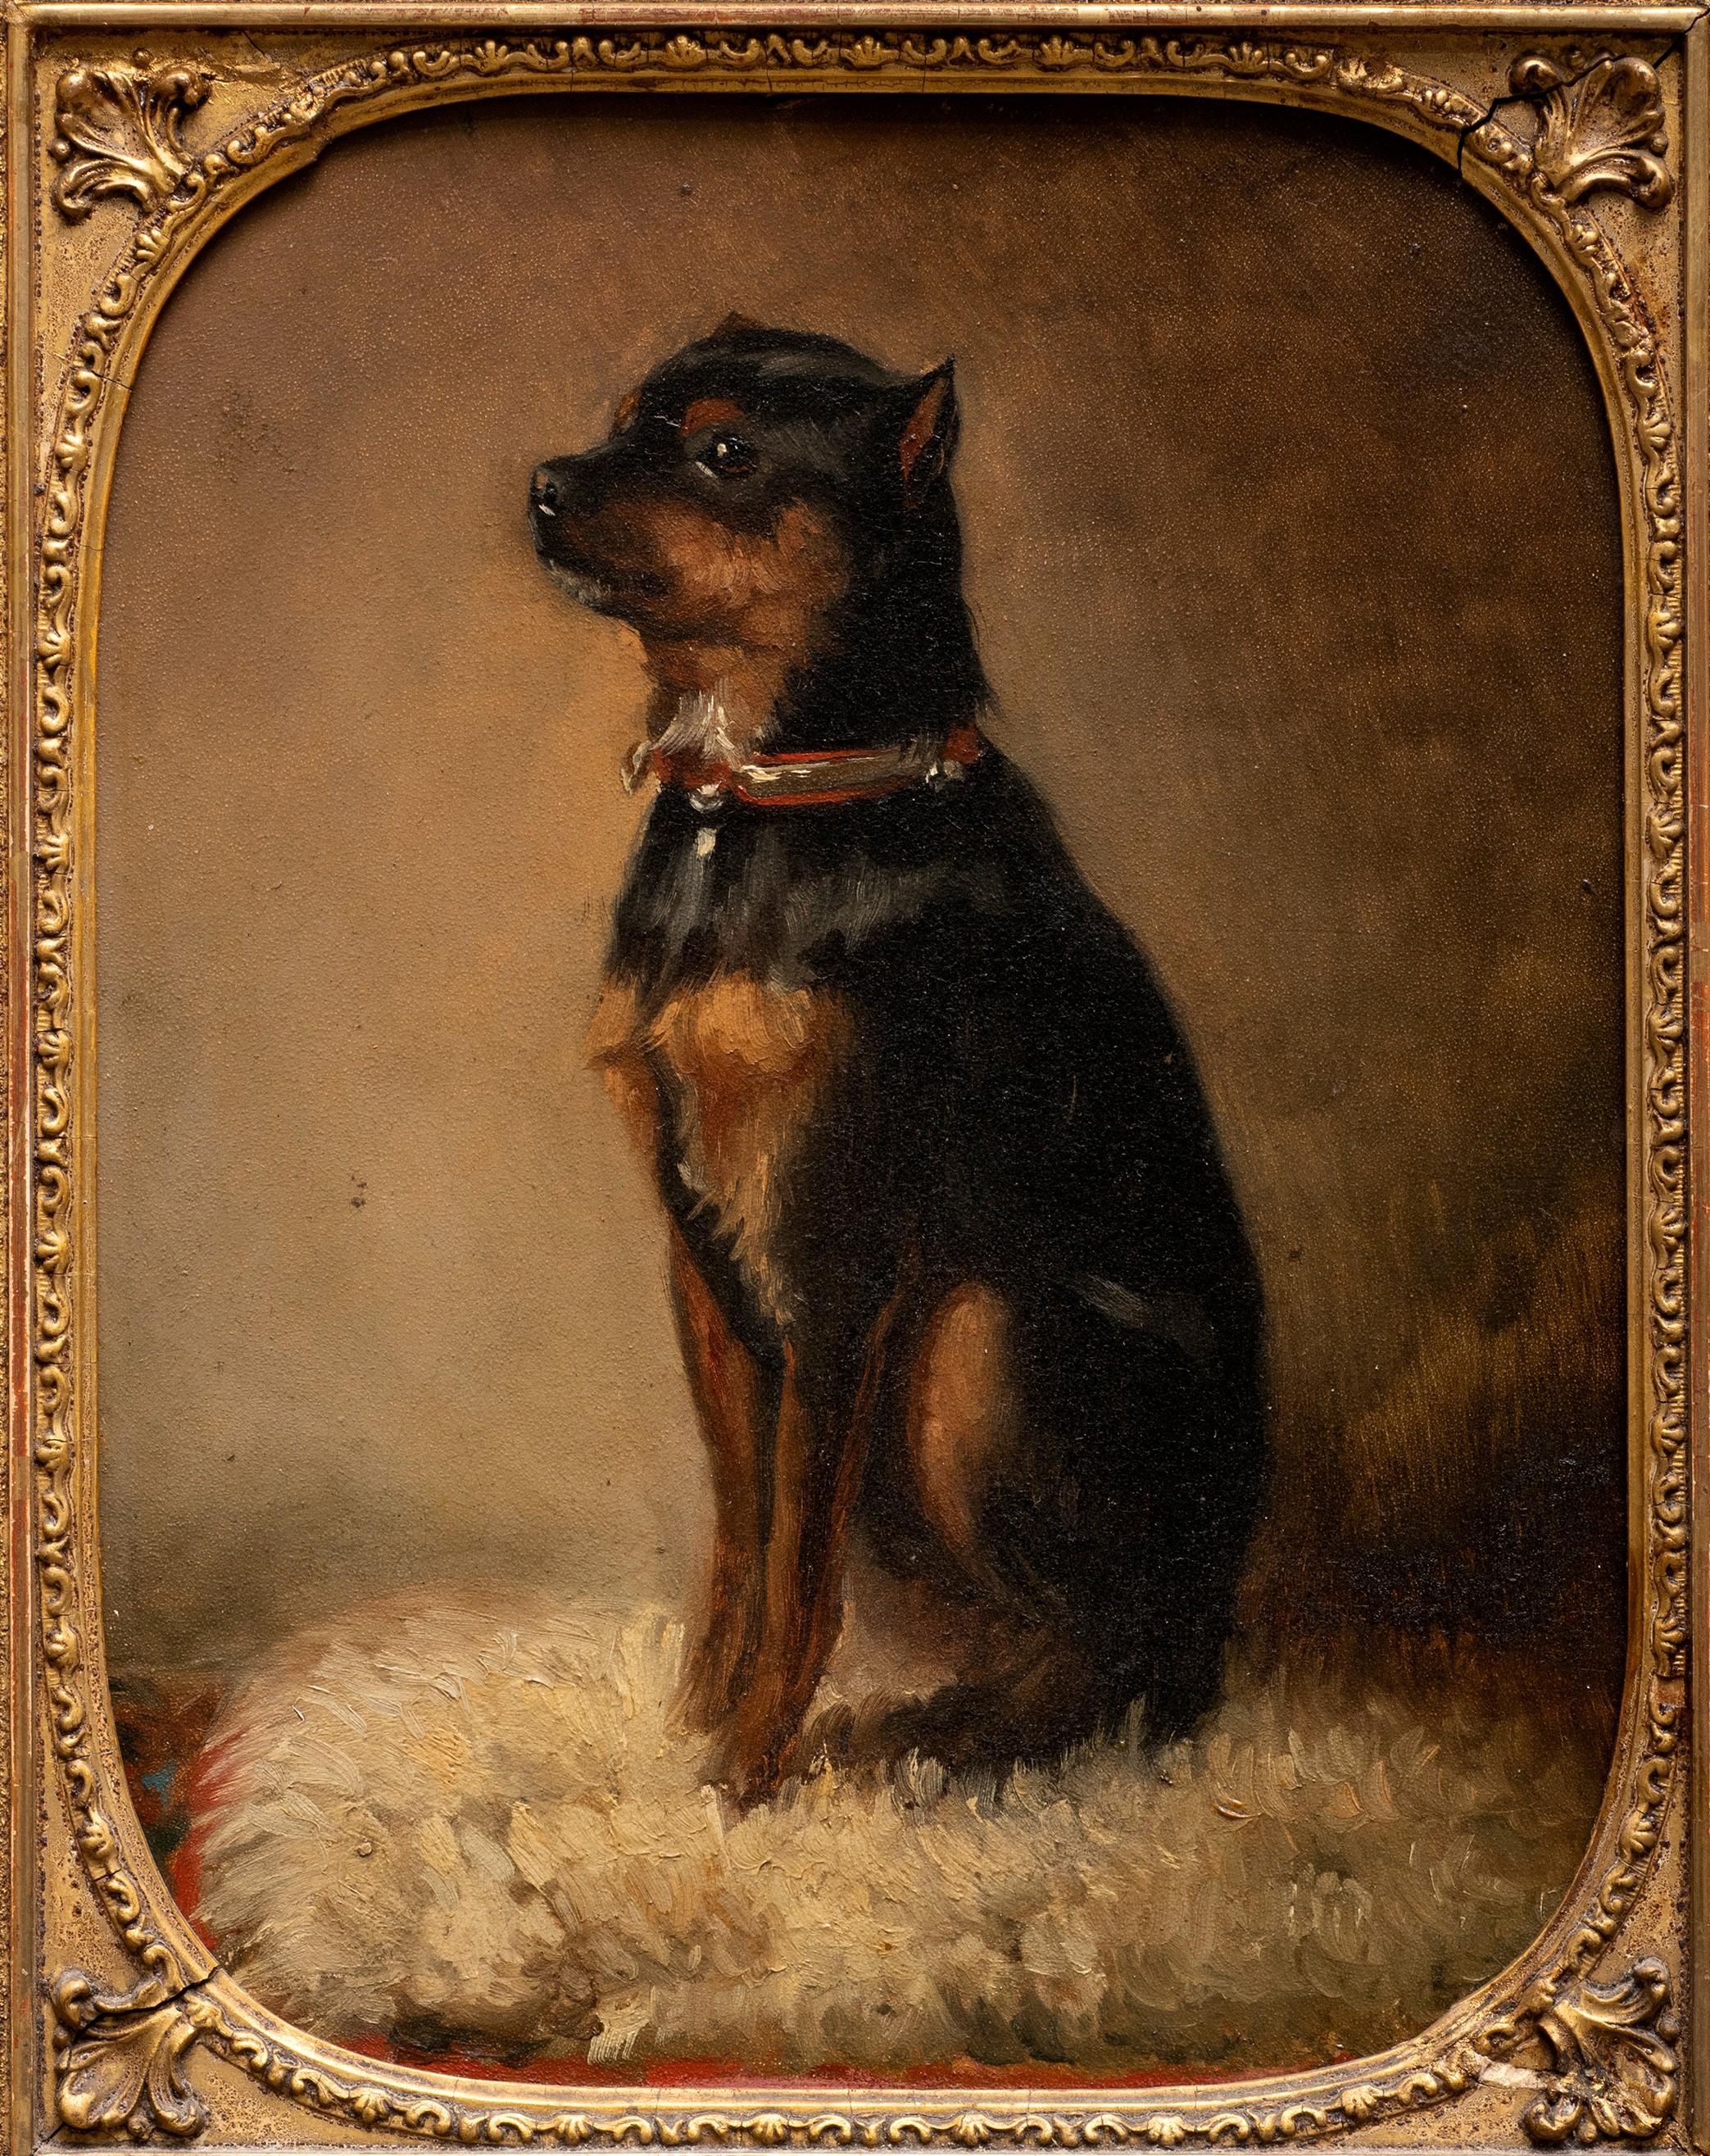 Dog Portrait 